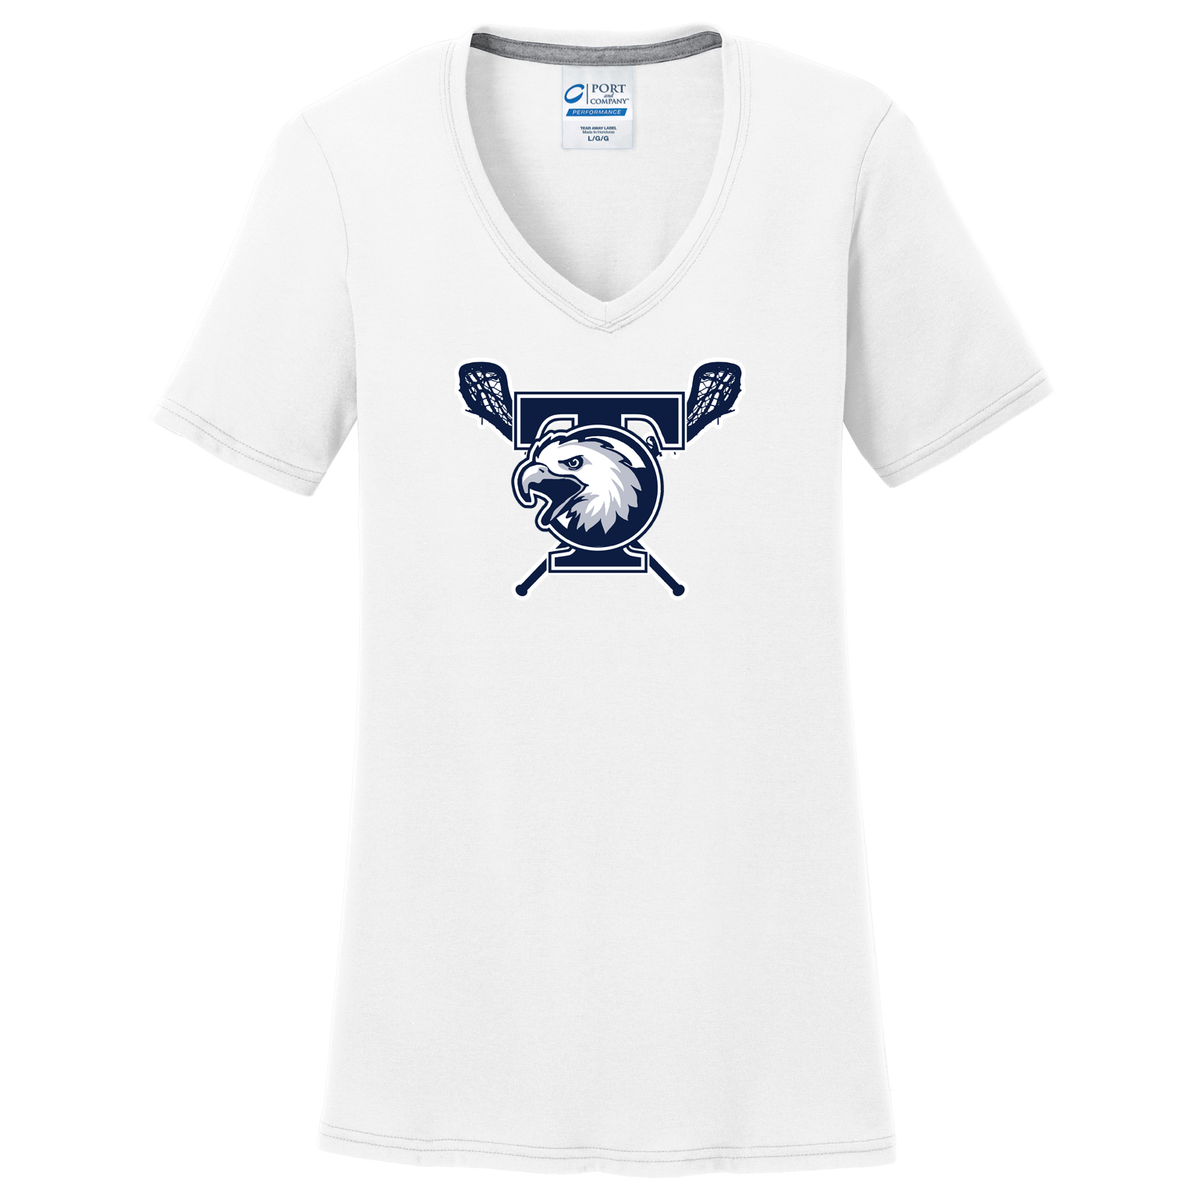 Tolland Lacrosse Club  Women's T-Shirt